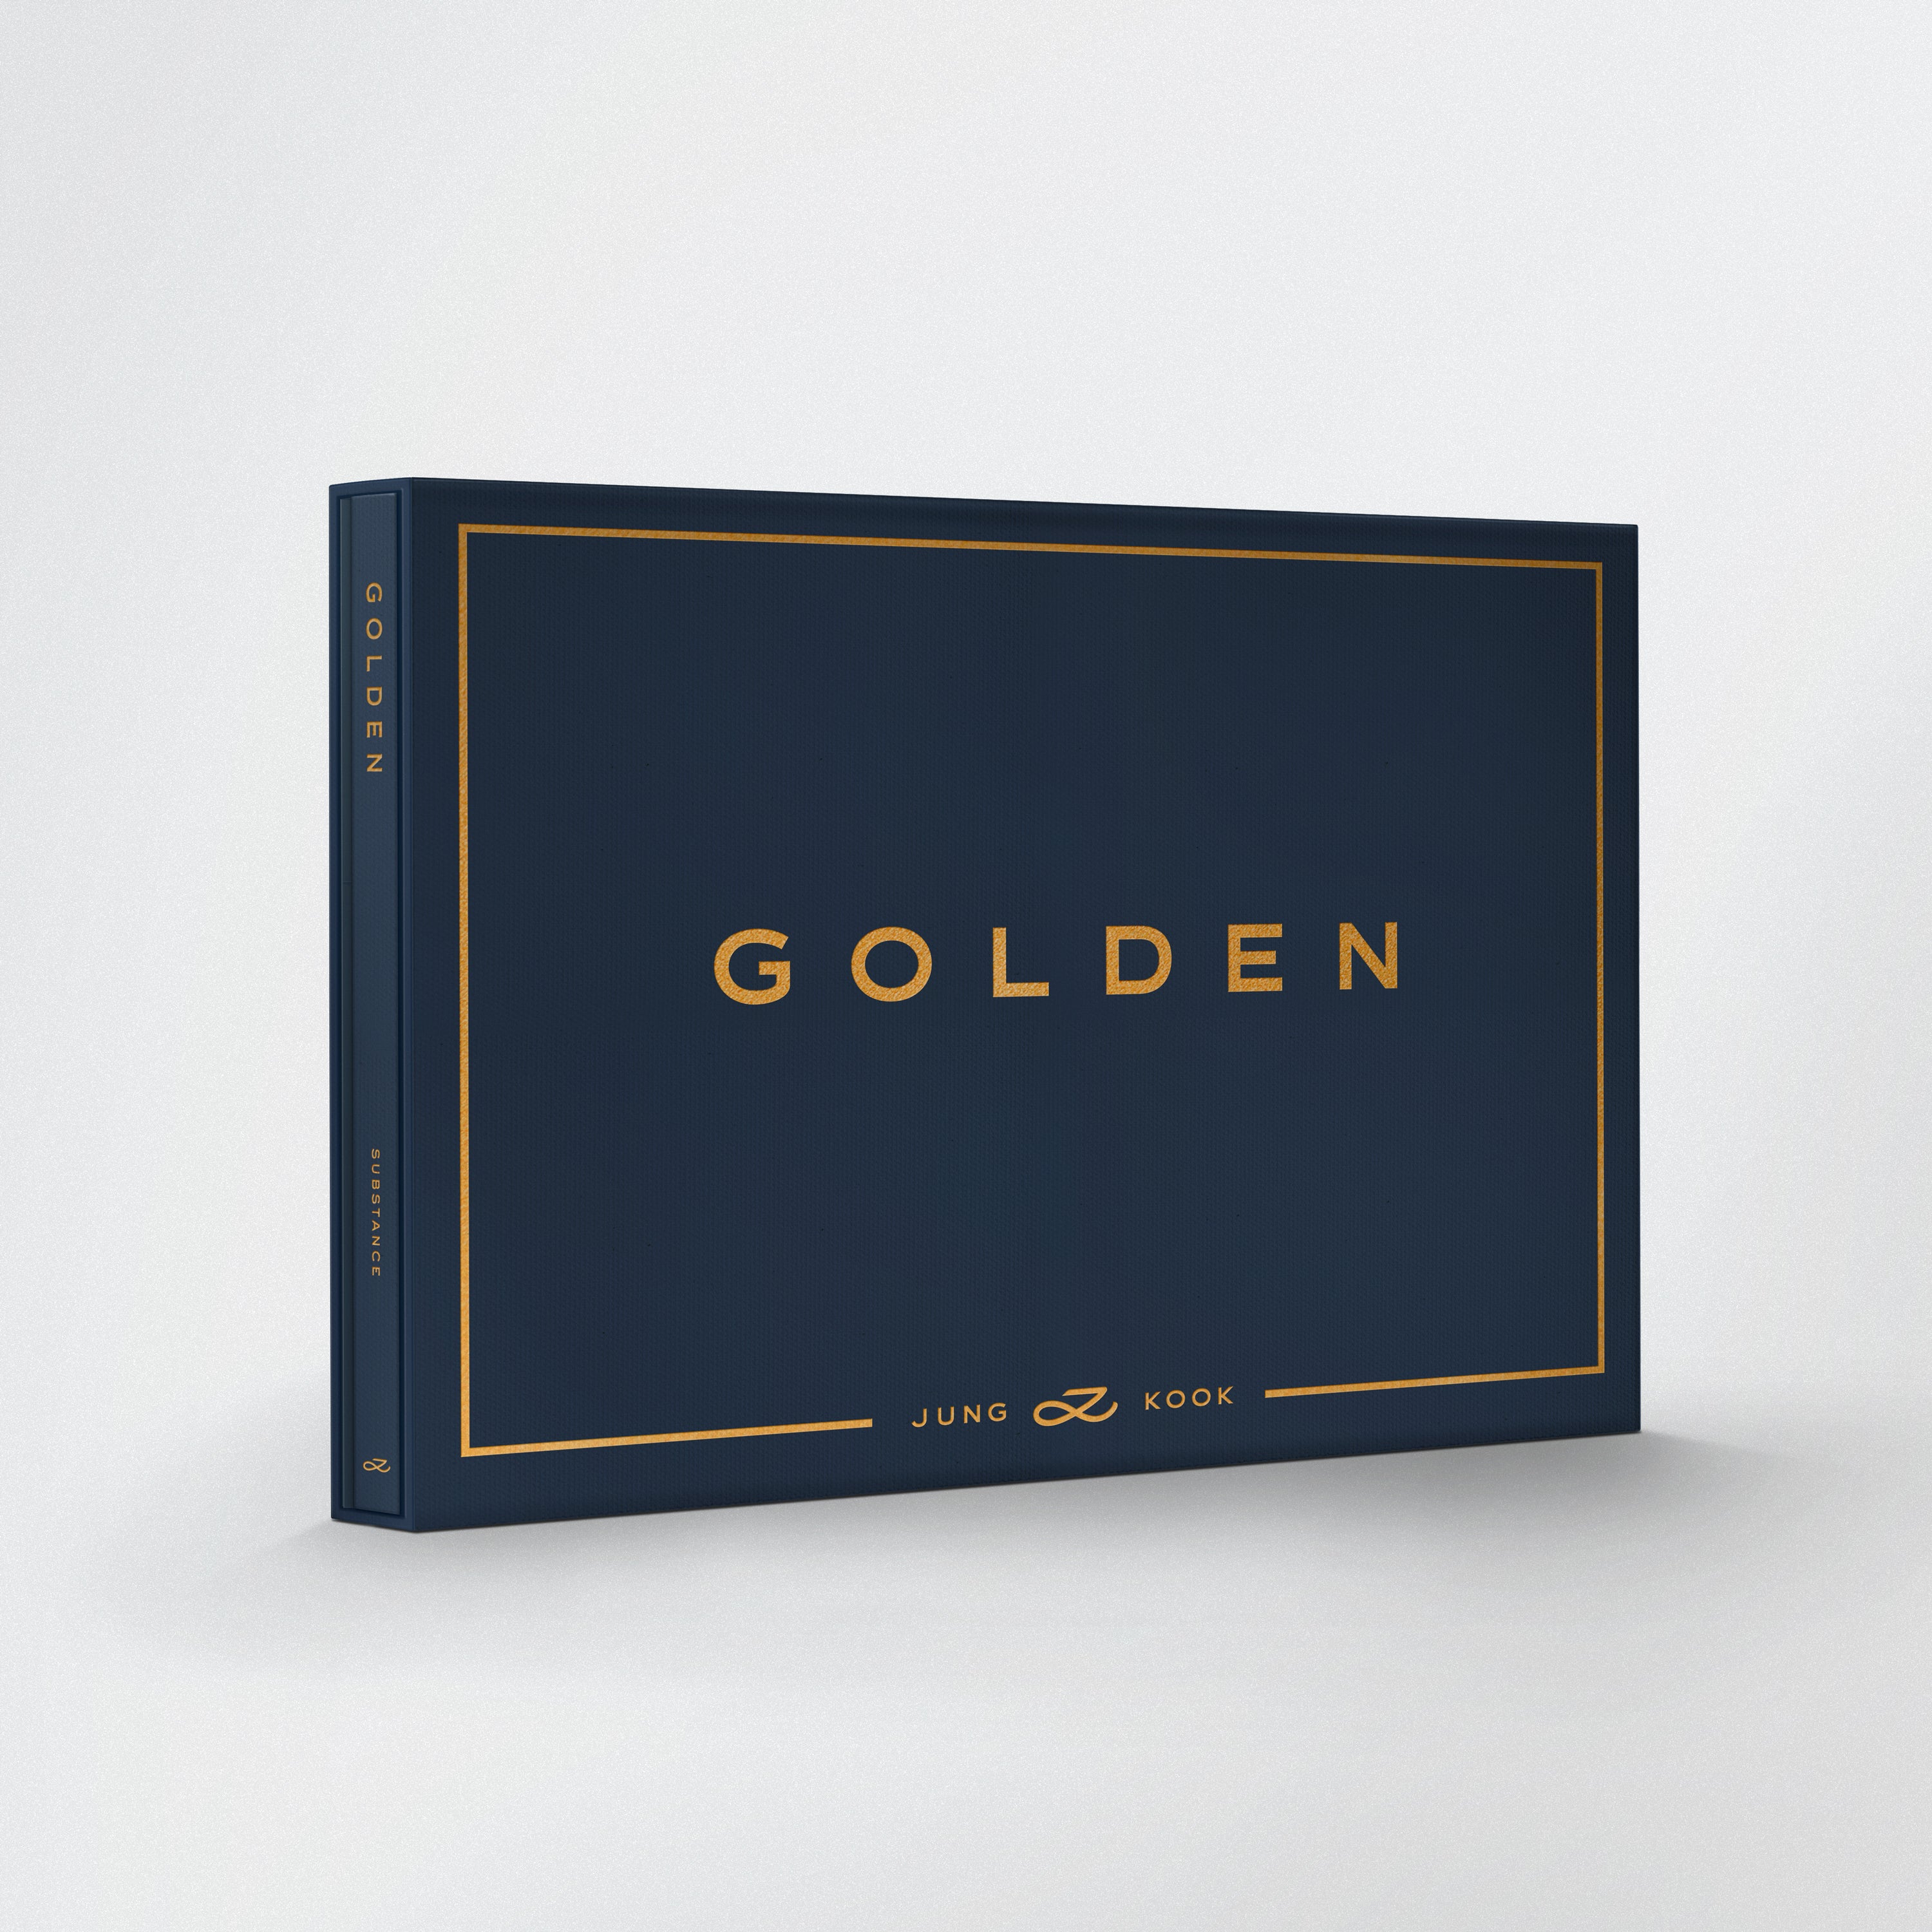 Jungkook - Golden (SUBSTANCE): CD